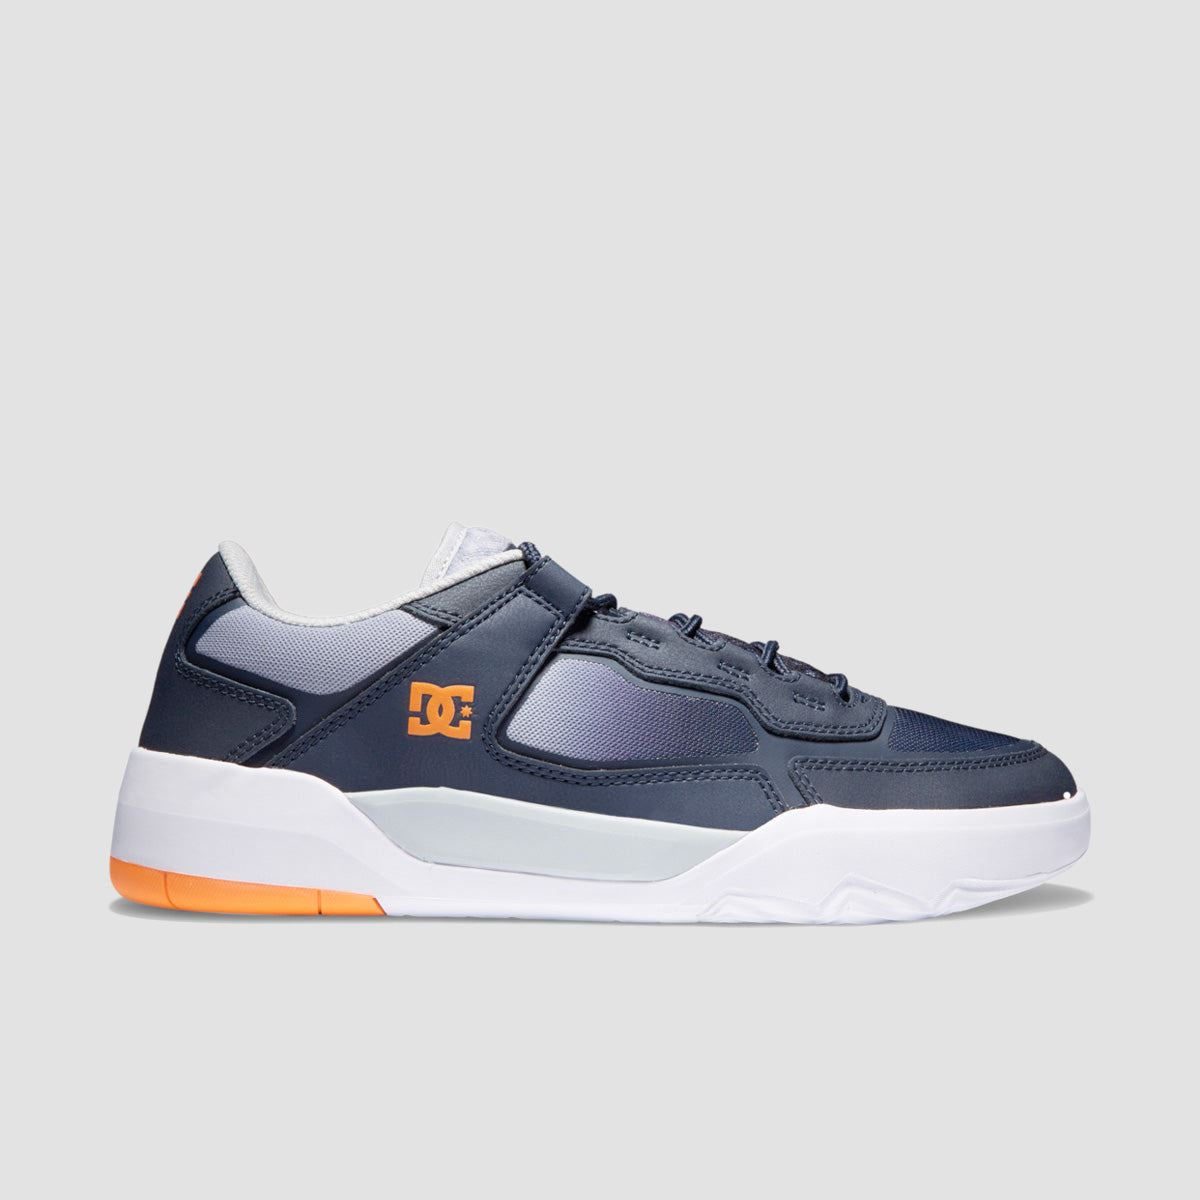 DC Metric Shoes - DC Navy/Orange